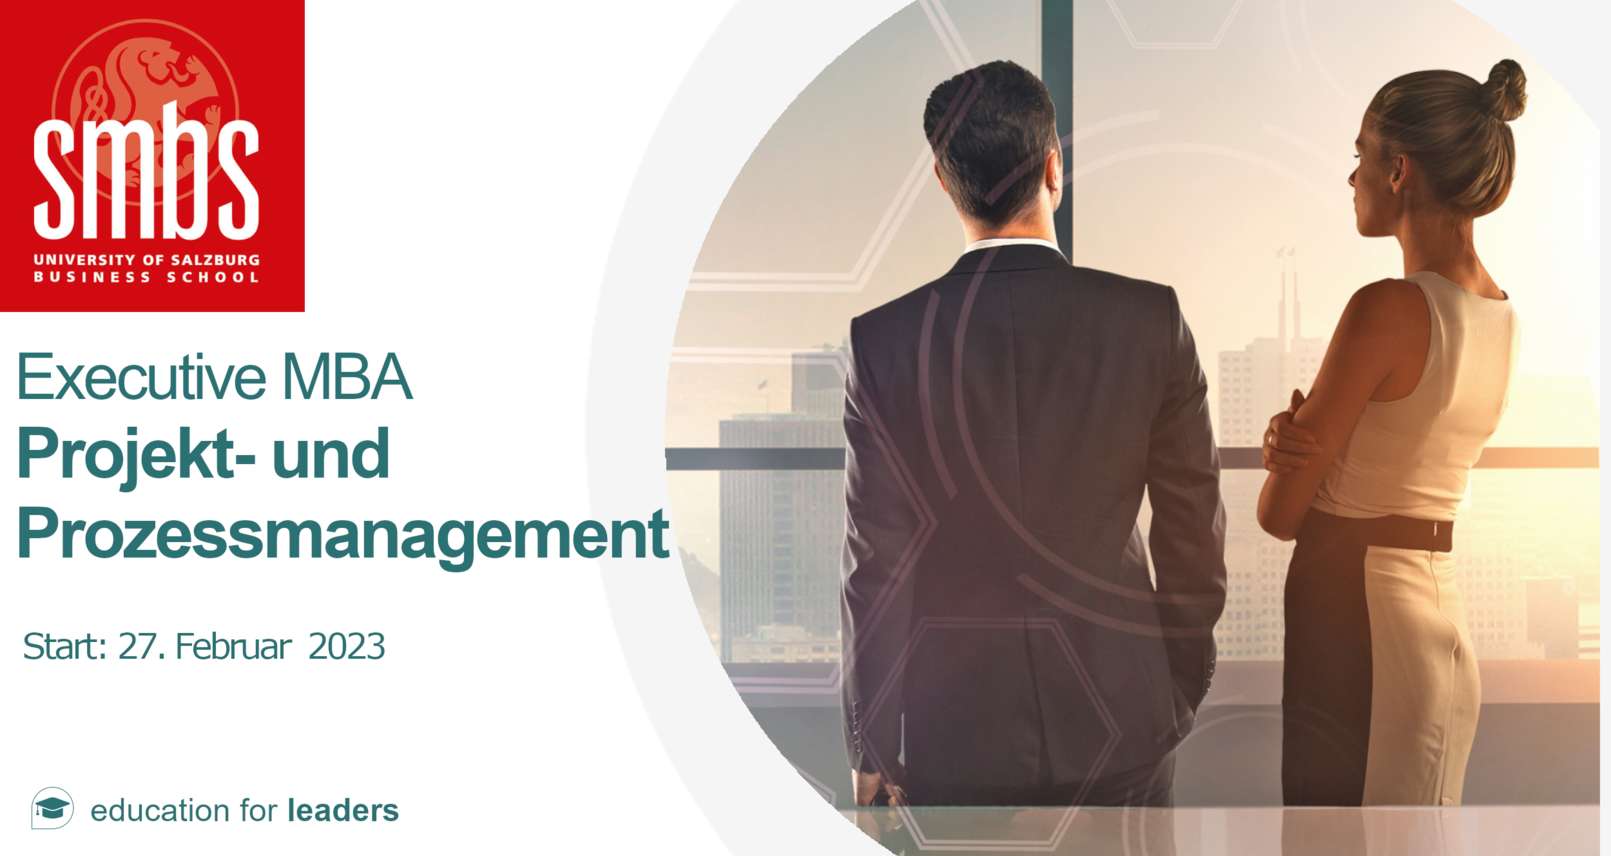 web_2020_Executive MBA Projekt- und Prozessmanagement_SMBS Sujetbild_quer.jpg